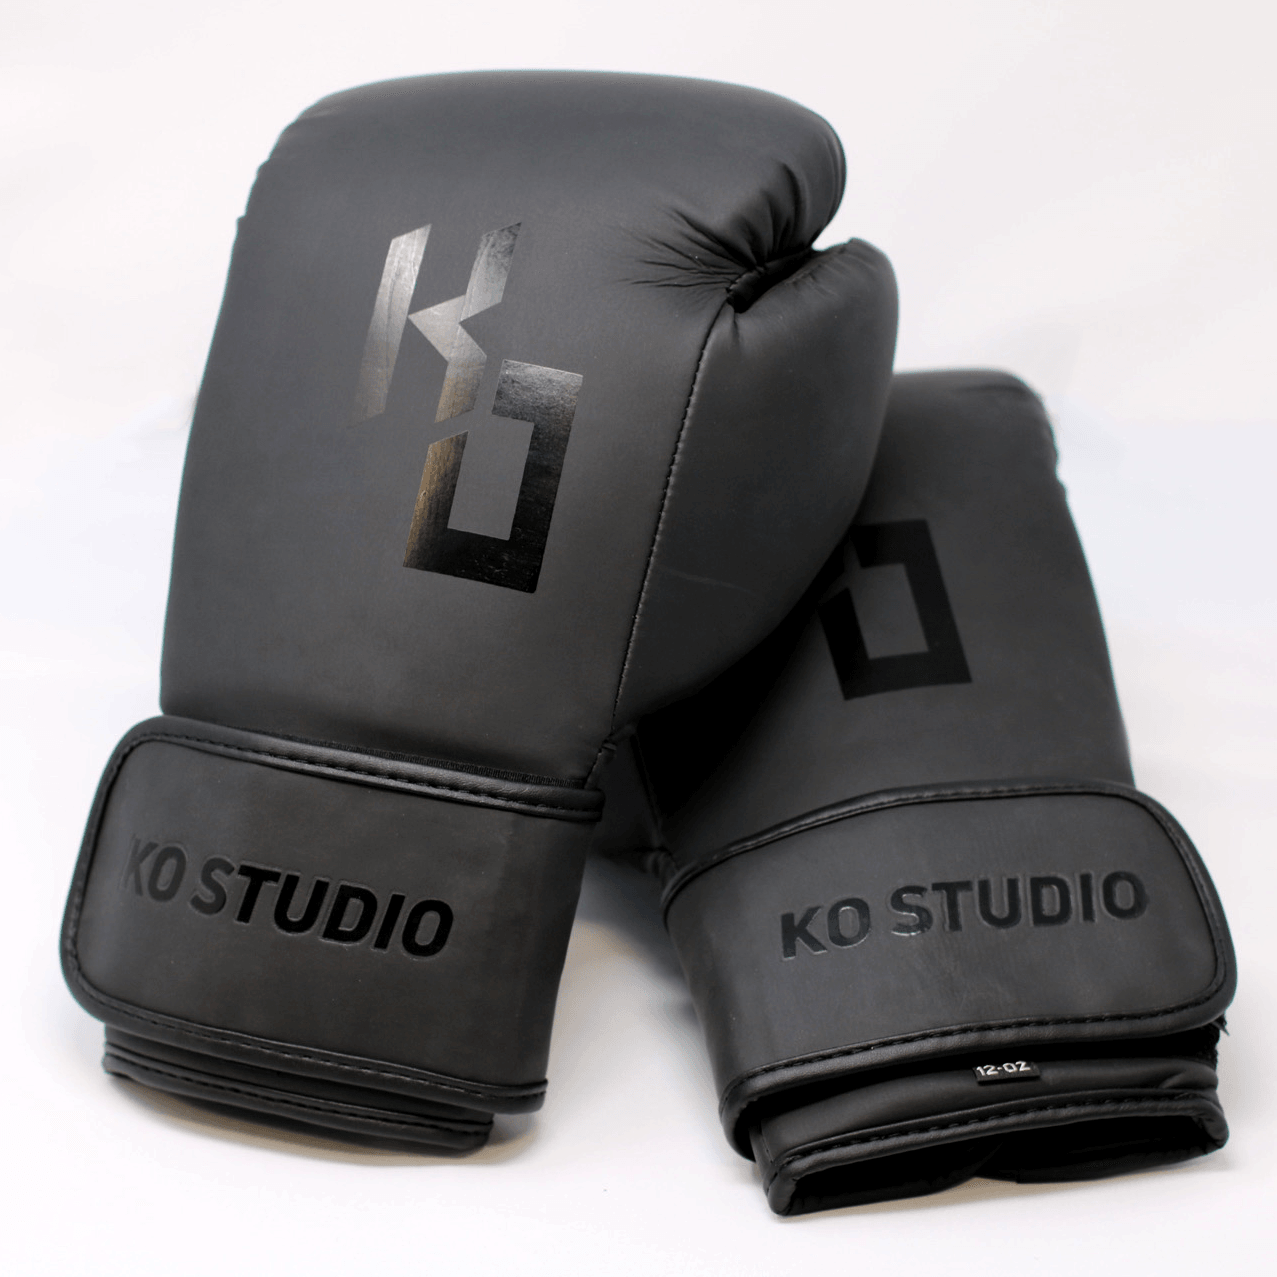 Ink 02 Boxing Gloves - KoStudio.co